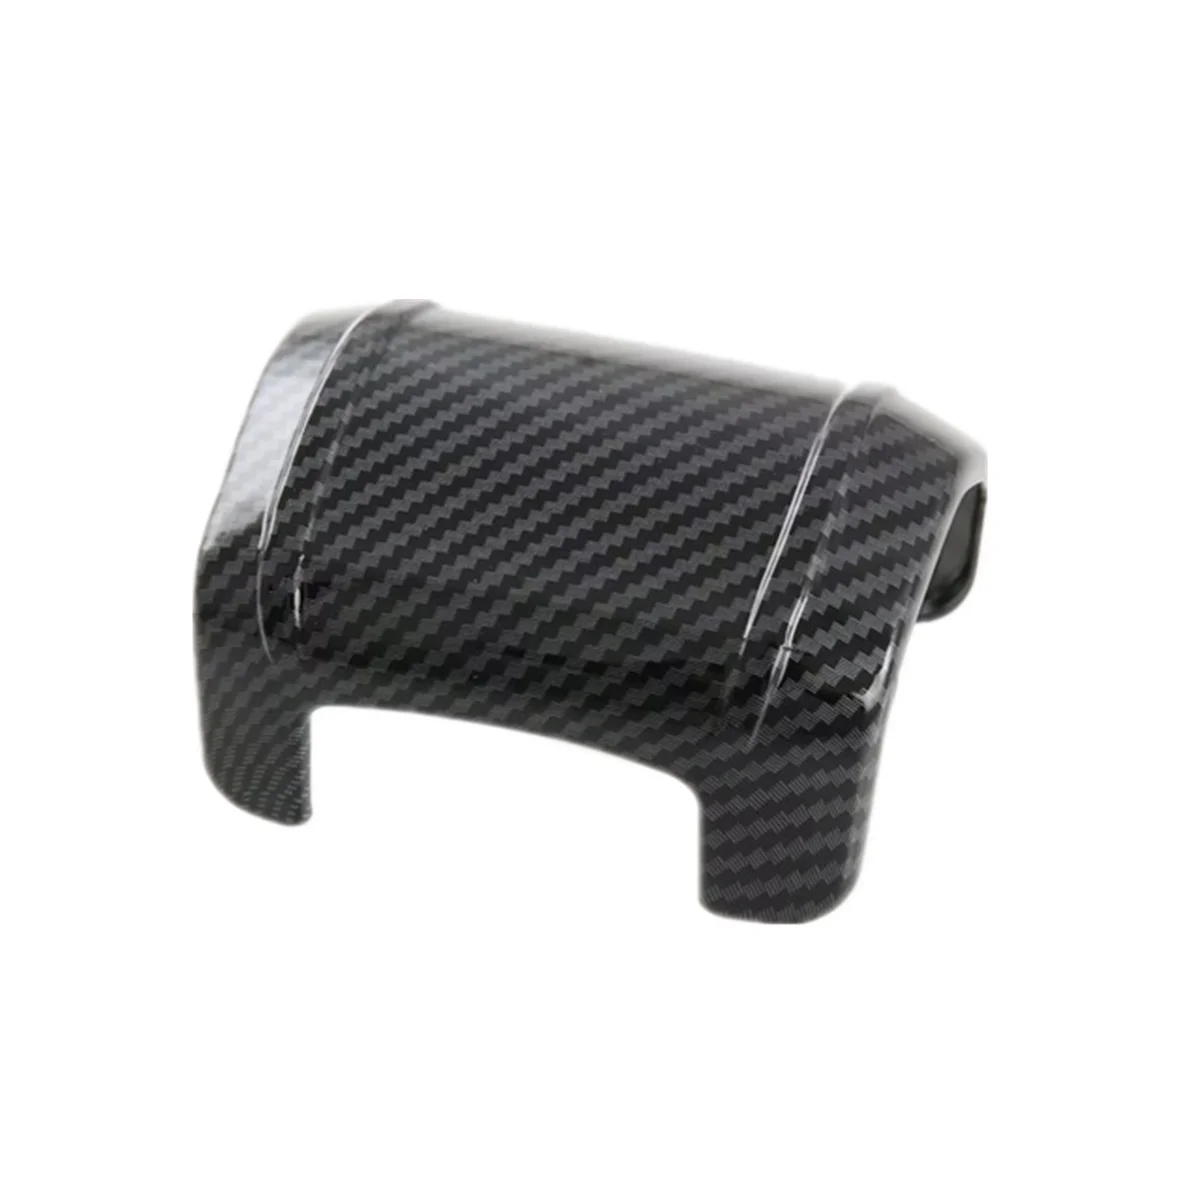 

For Ford F150 2021 2022 2023 Car Center Console Gear Head Shift Knob Cover Trim Interior Accessories - ABS Carbon Fiber